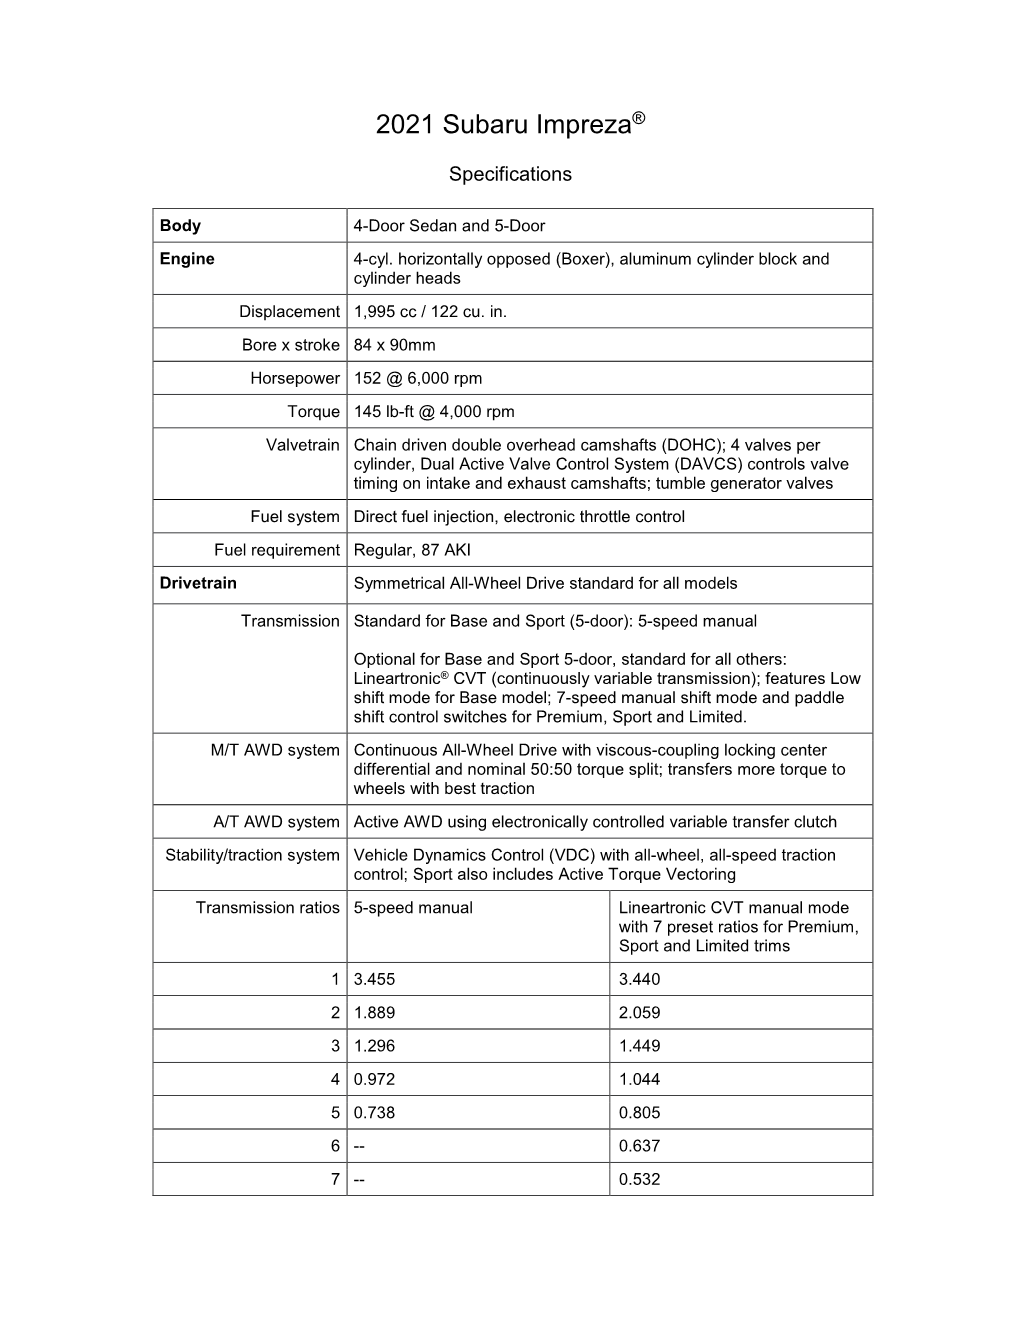 2021 Subaru Impreza Specifications / 2